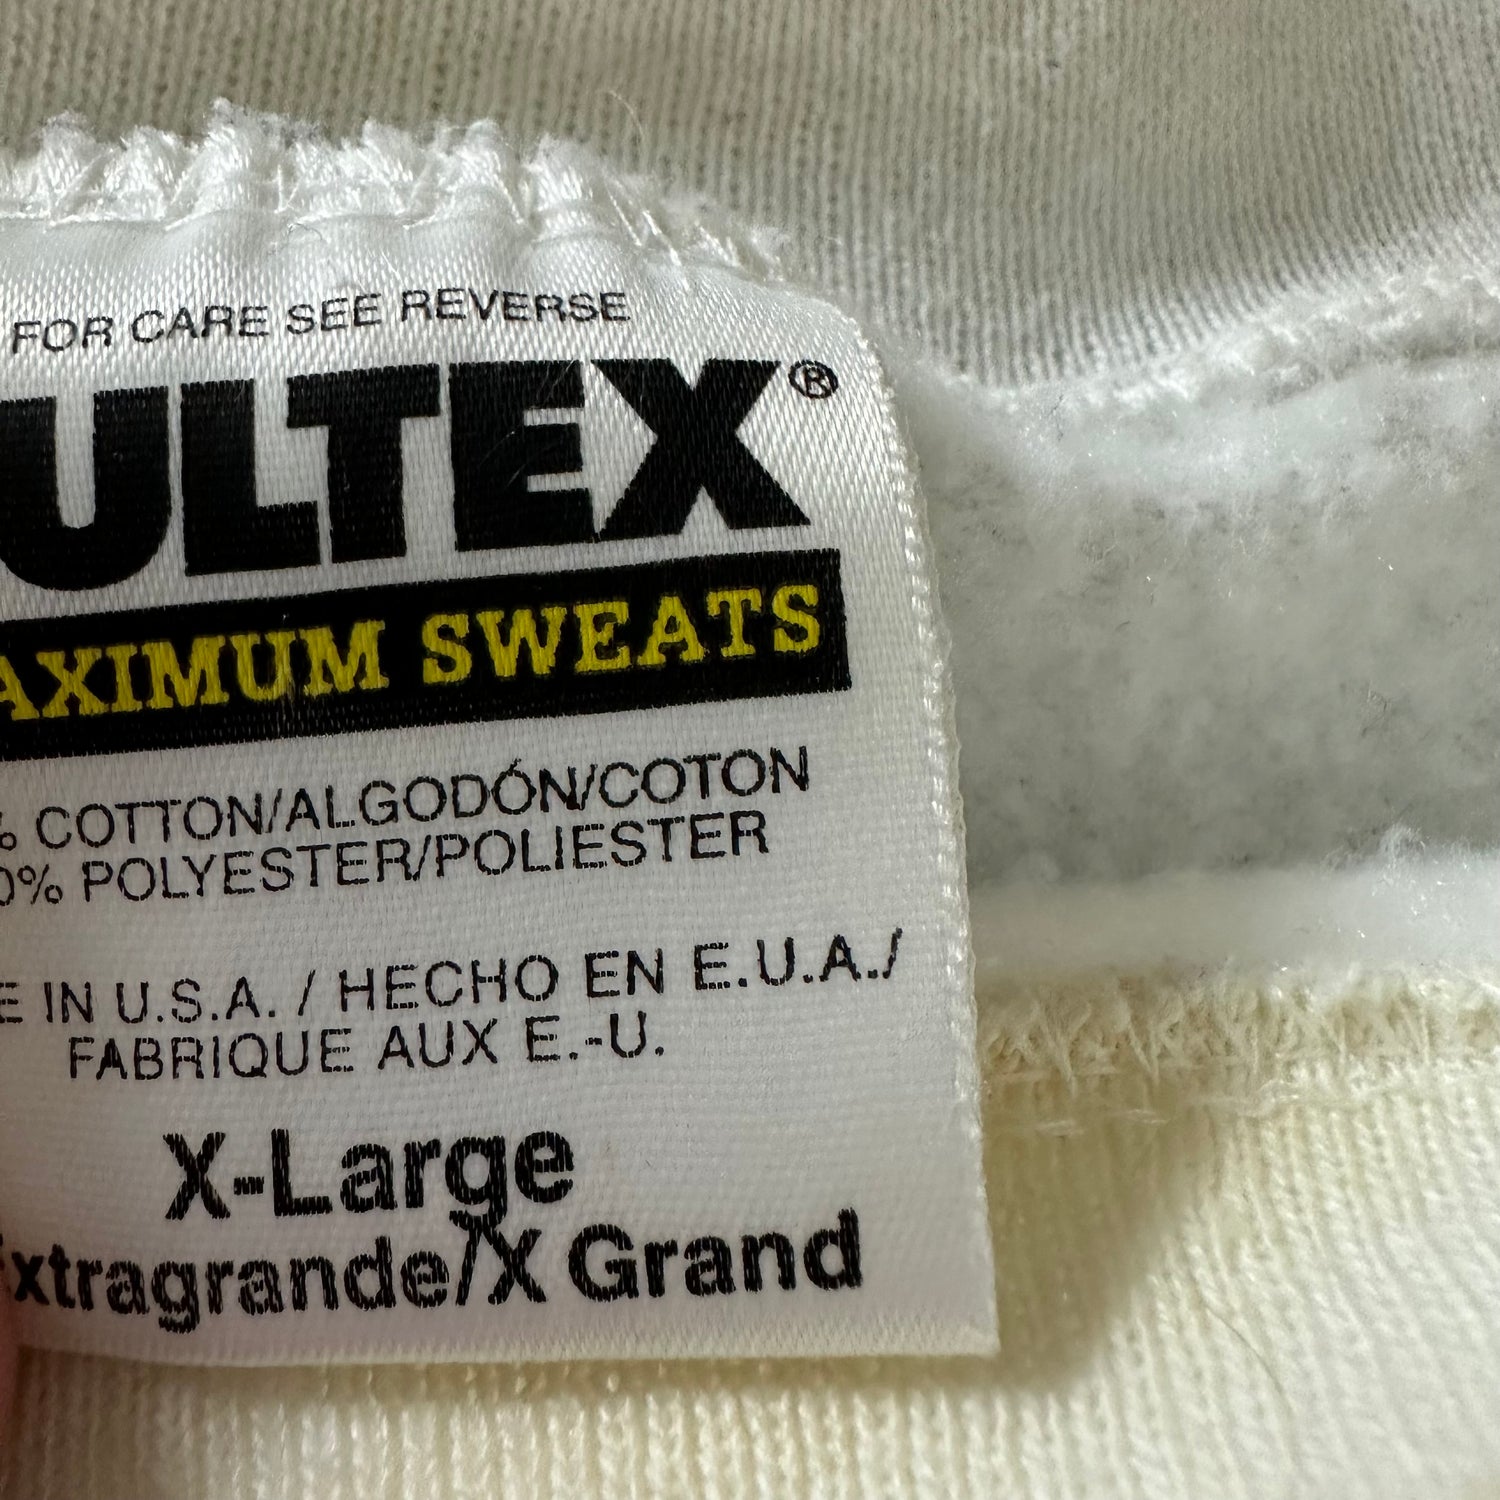 Vintage 1990s Rusty Wallace Sweatshirt size XL